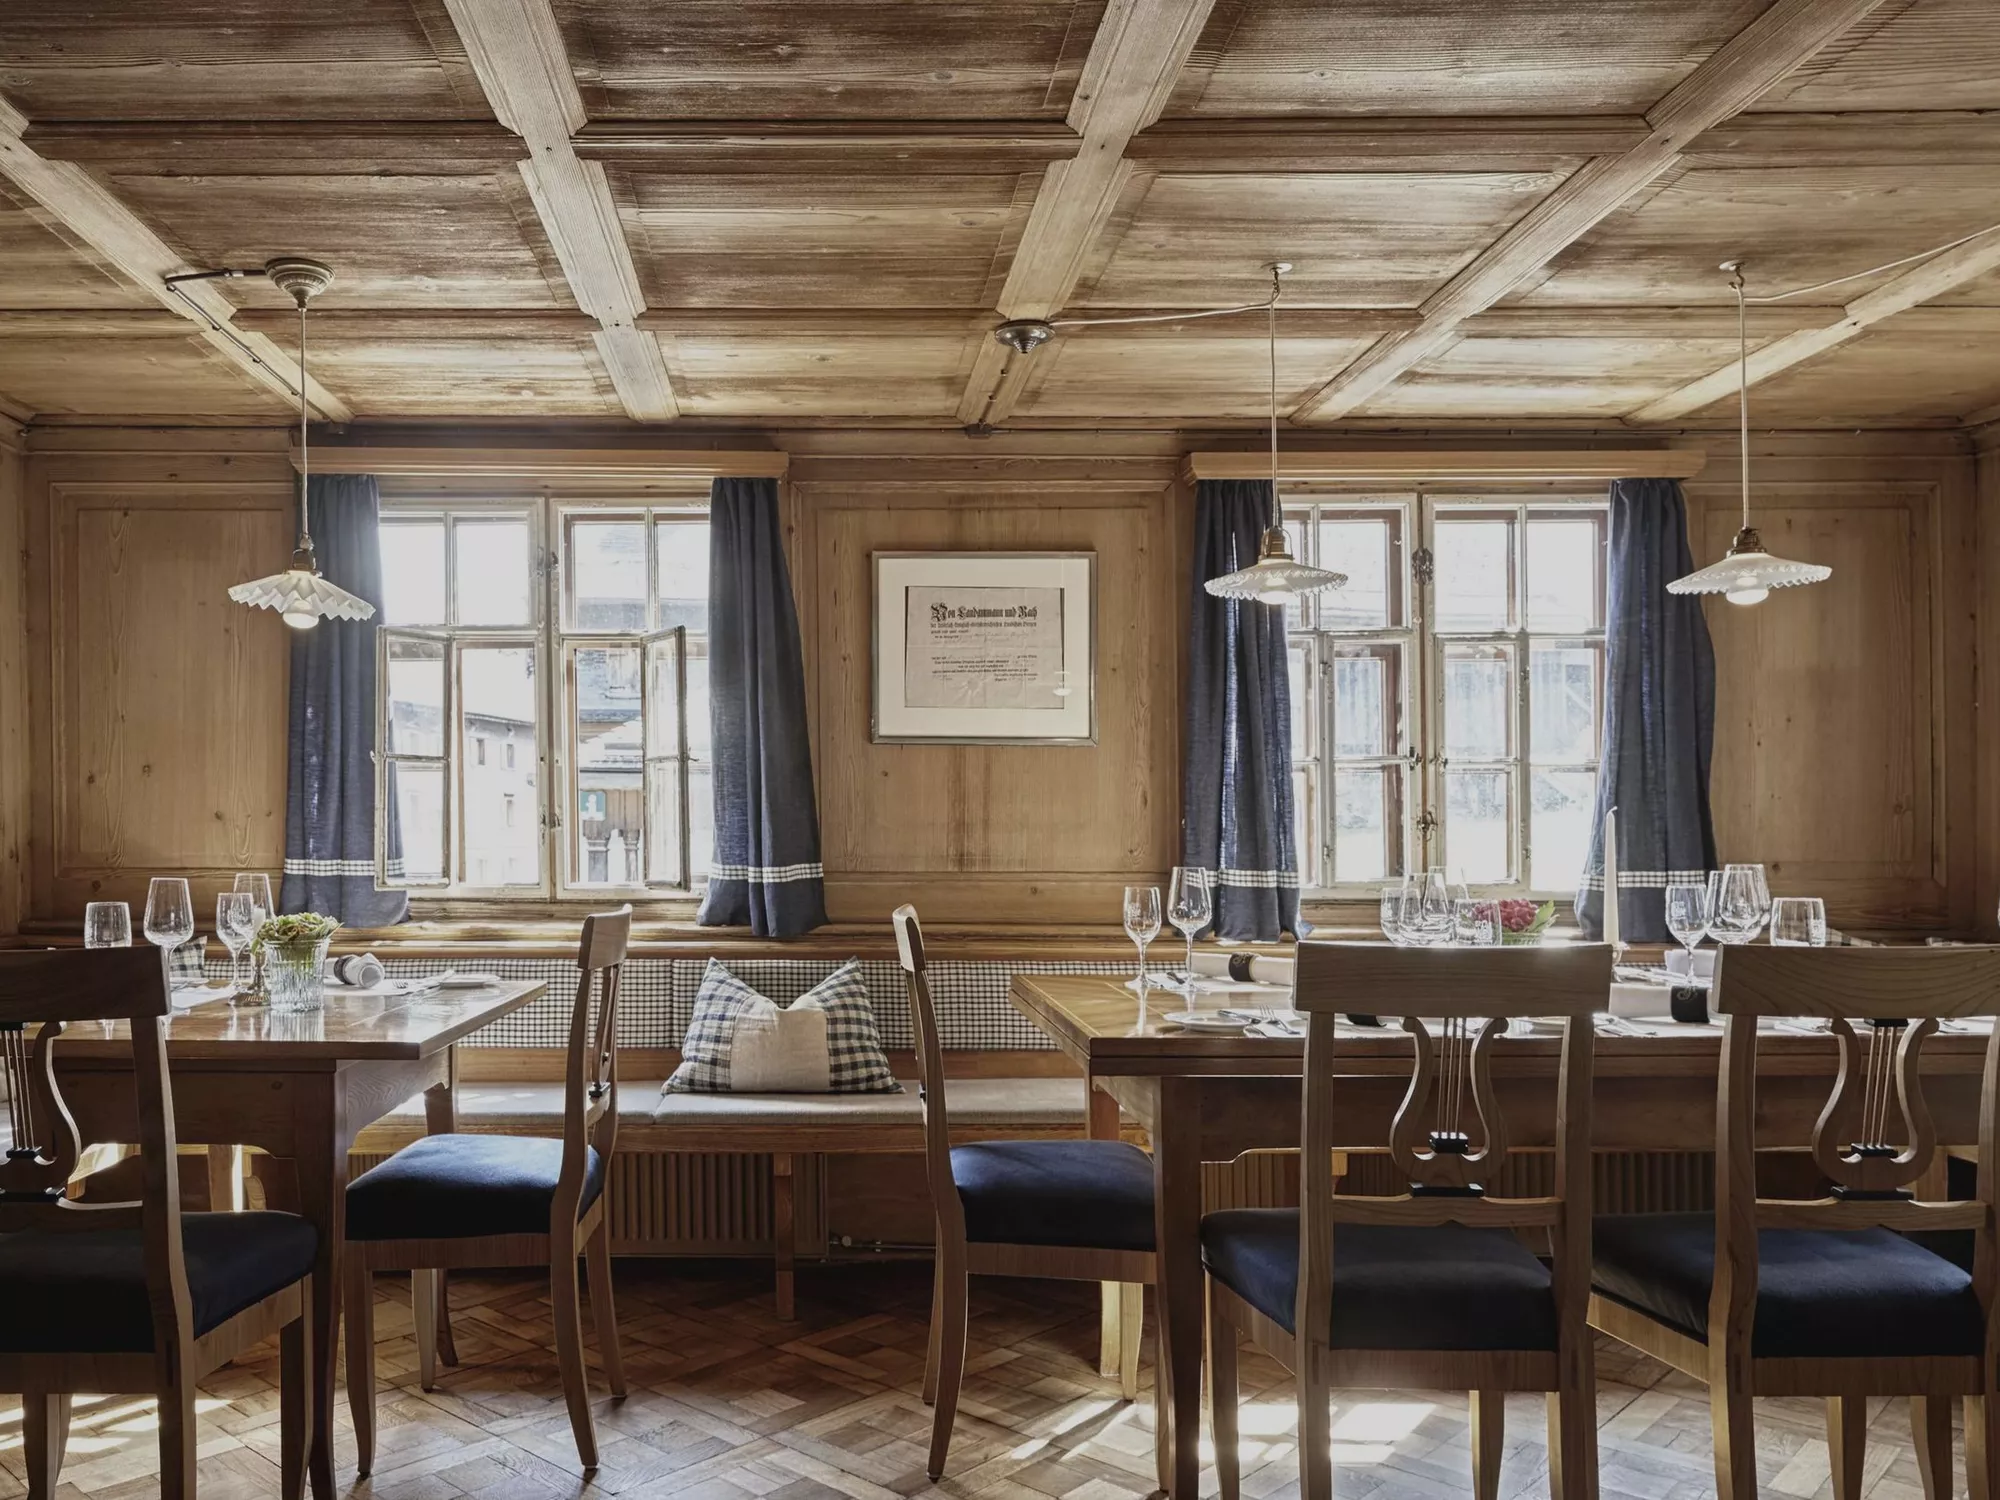 Set tables in the dining room of the Hotel Hirschen restaurant in Schwarzenberg (c) Adolf Bereuter.